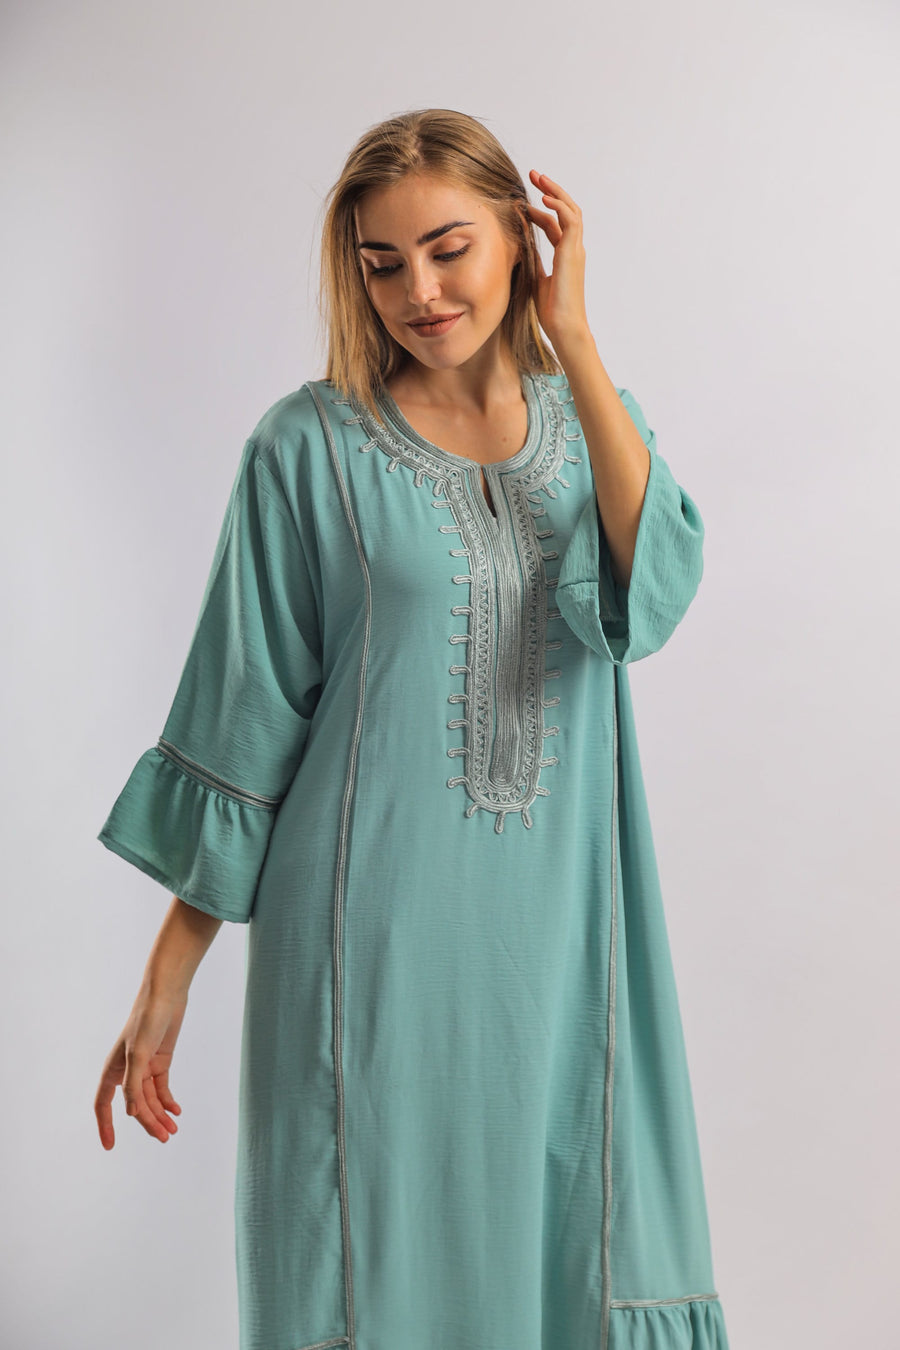 Luxurious light turquoise linen/cotton caftan, chic caftan, Summer Kaftan, Egyptian cotton/linen, Caftans for women, cotton caftan